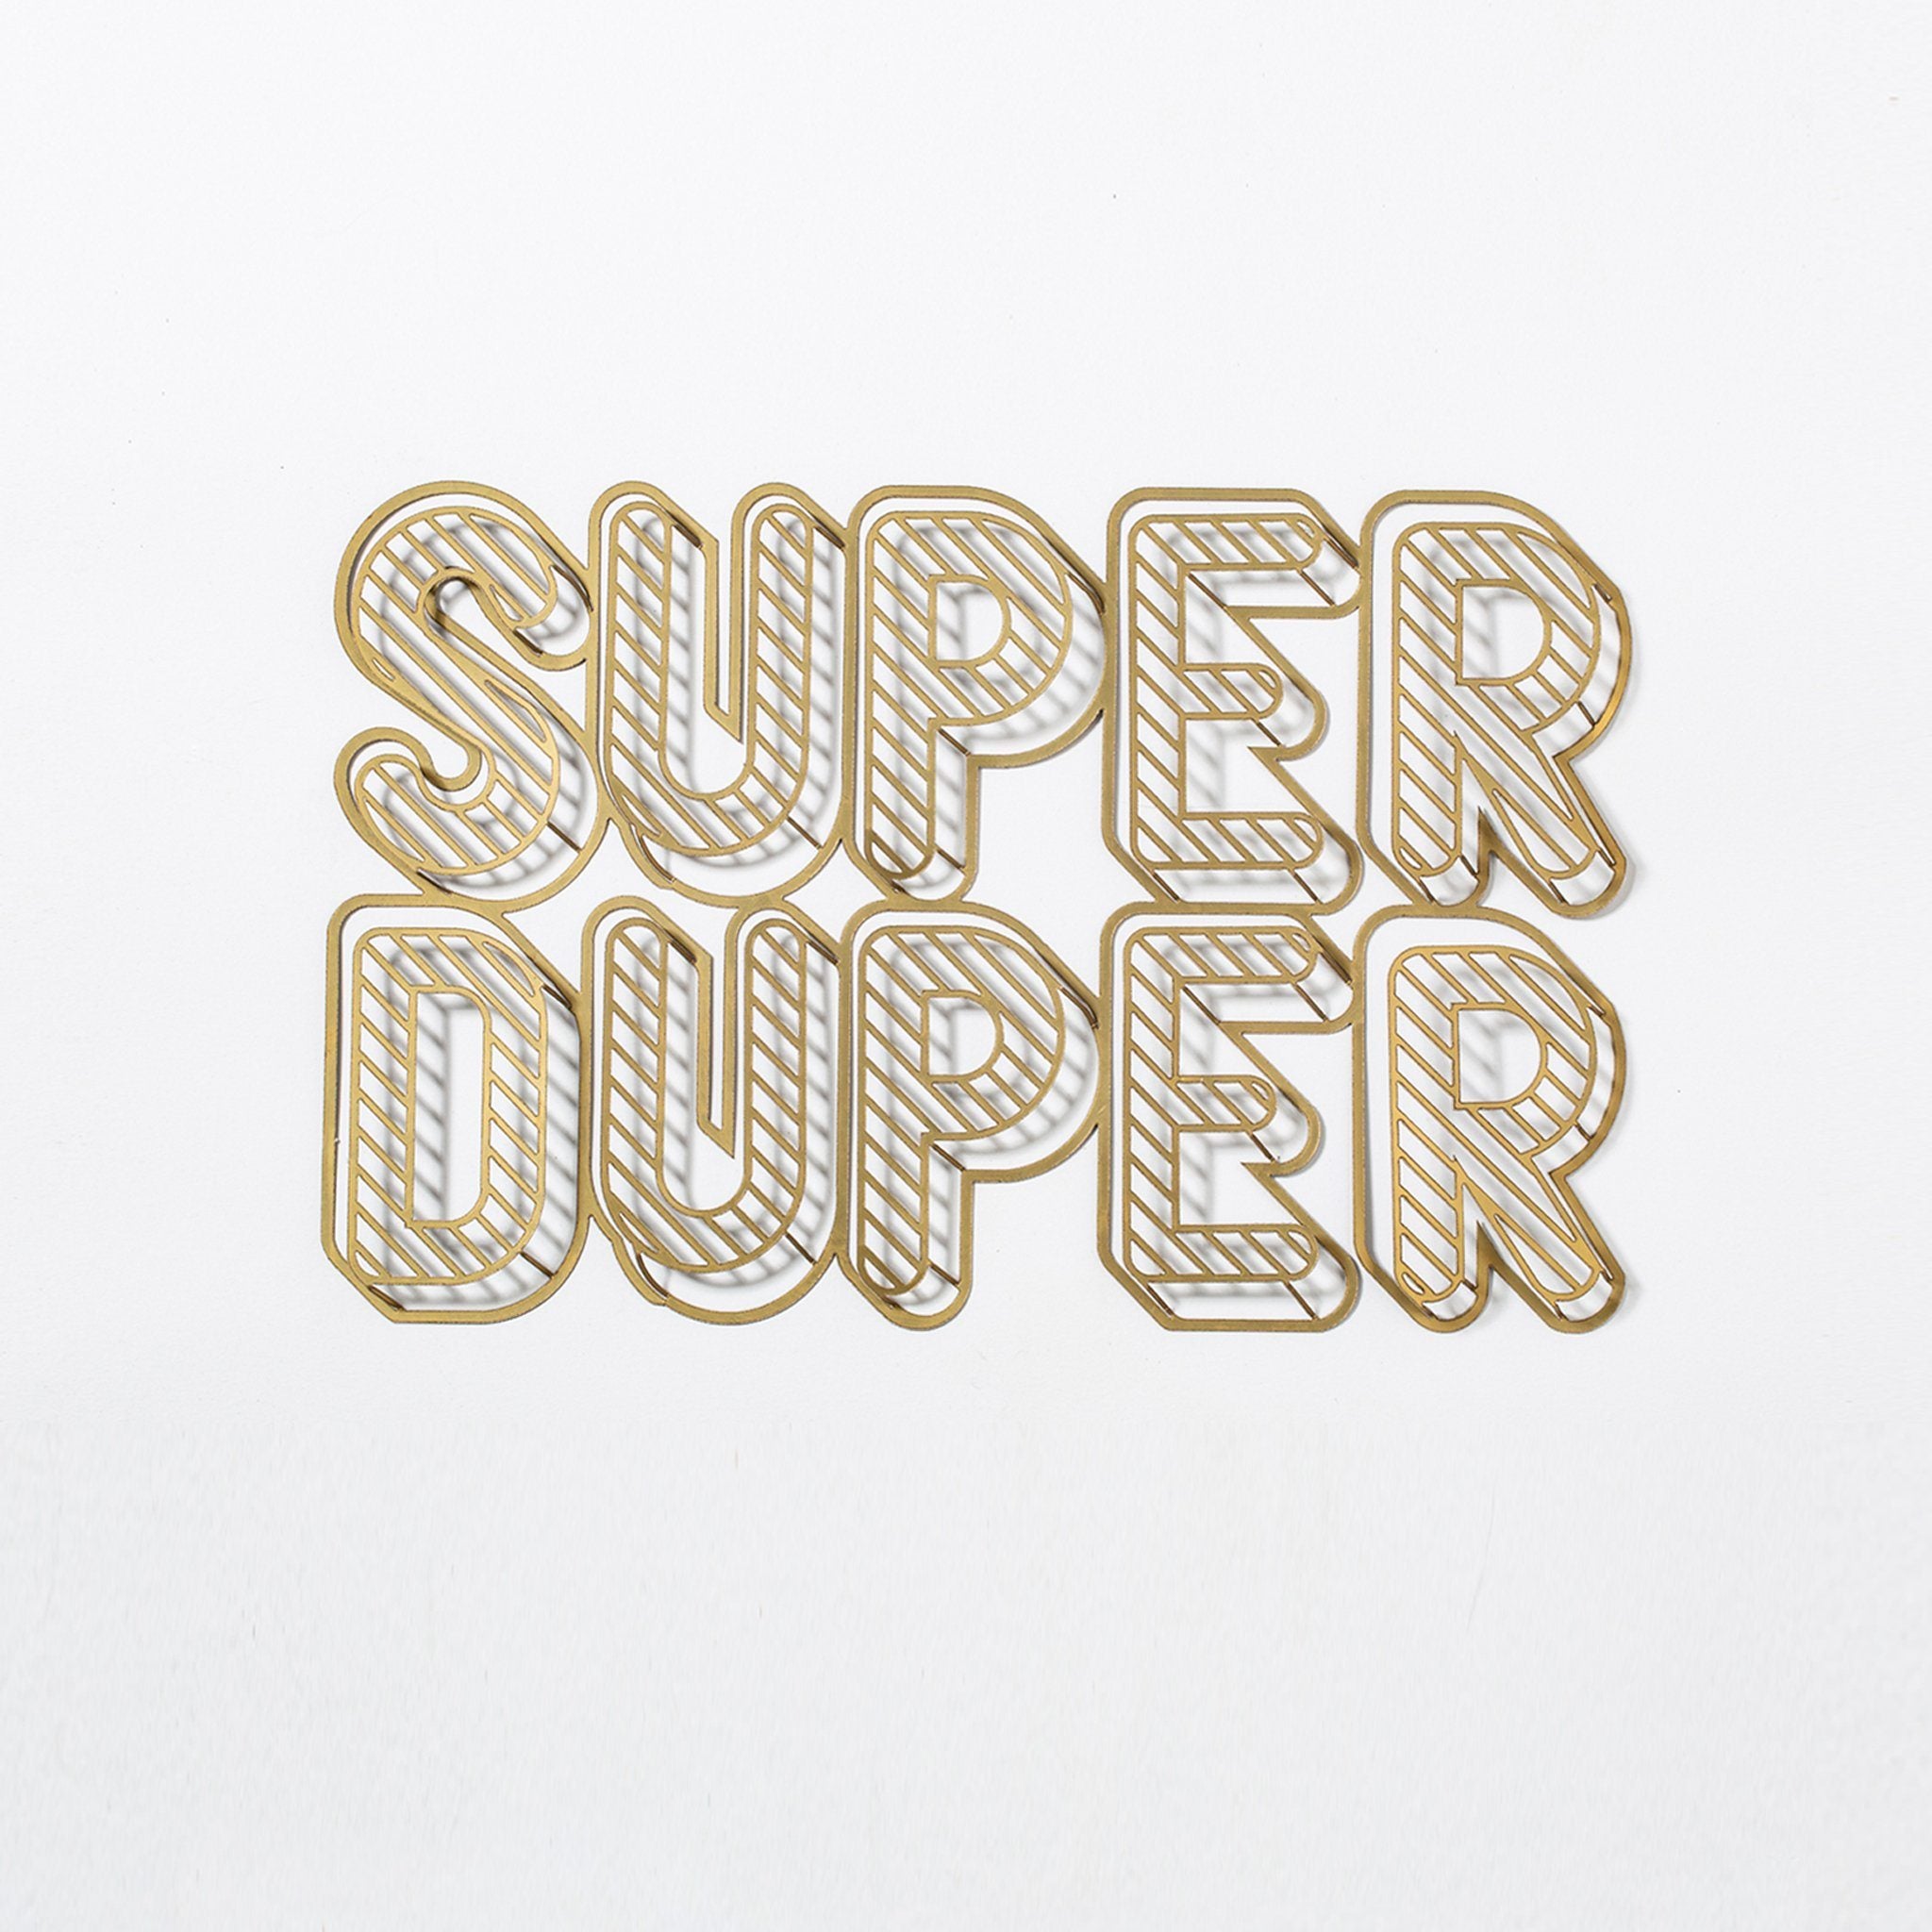 SUPER DUPER Inspirational Phrase to hang on the wall | Wall Decor ShapeMixer 